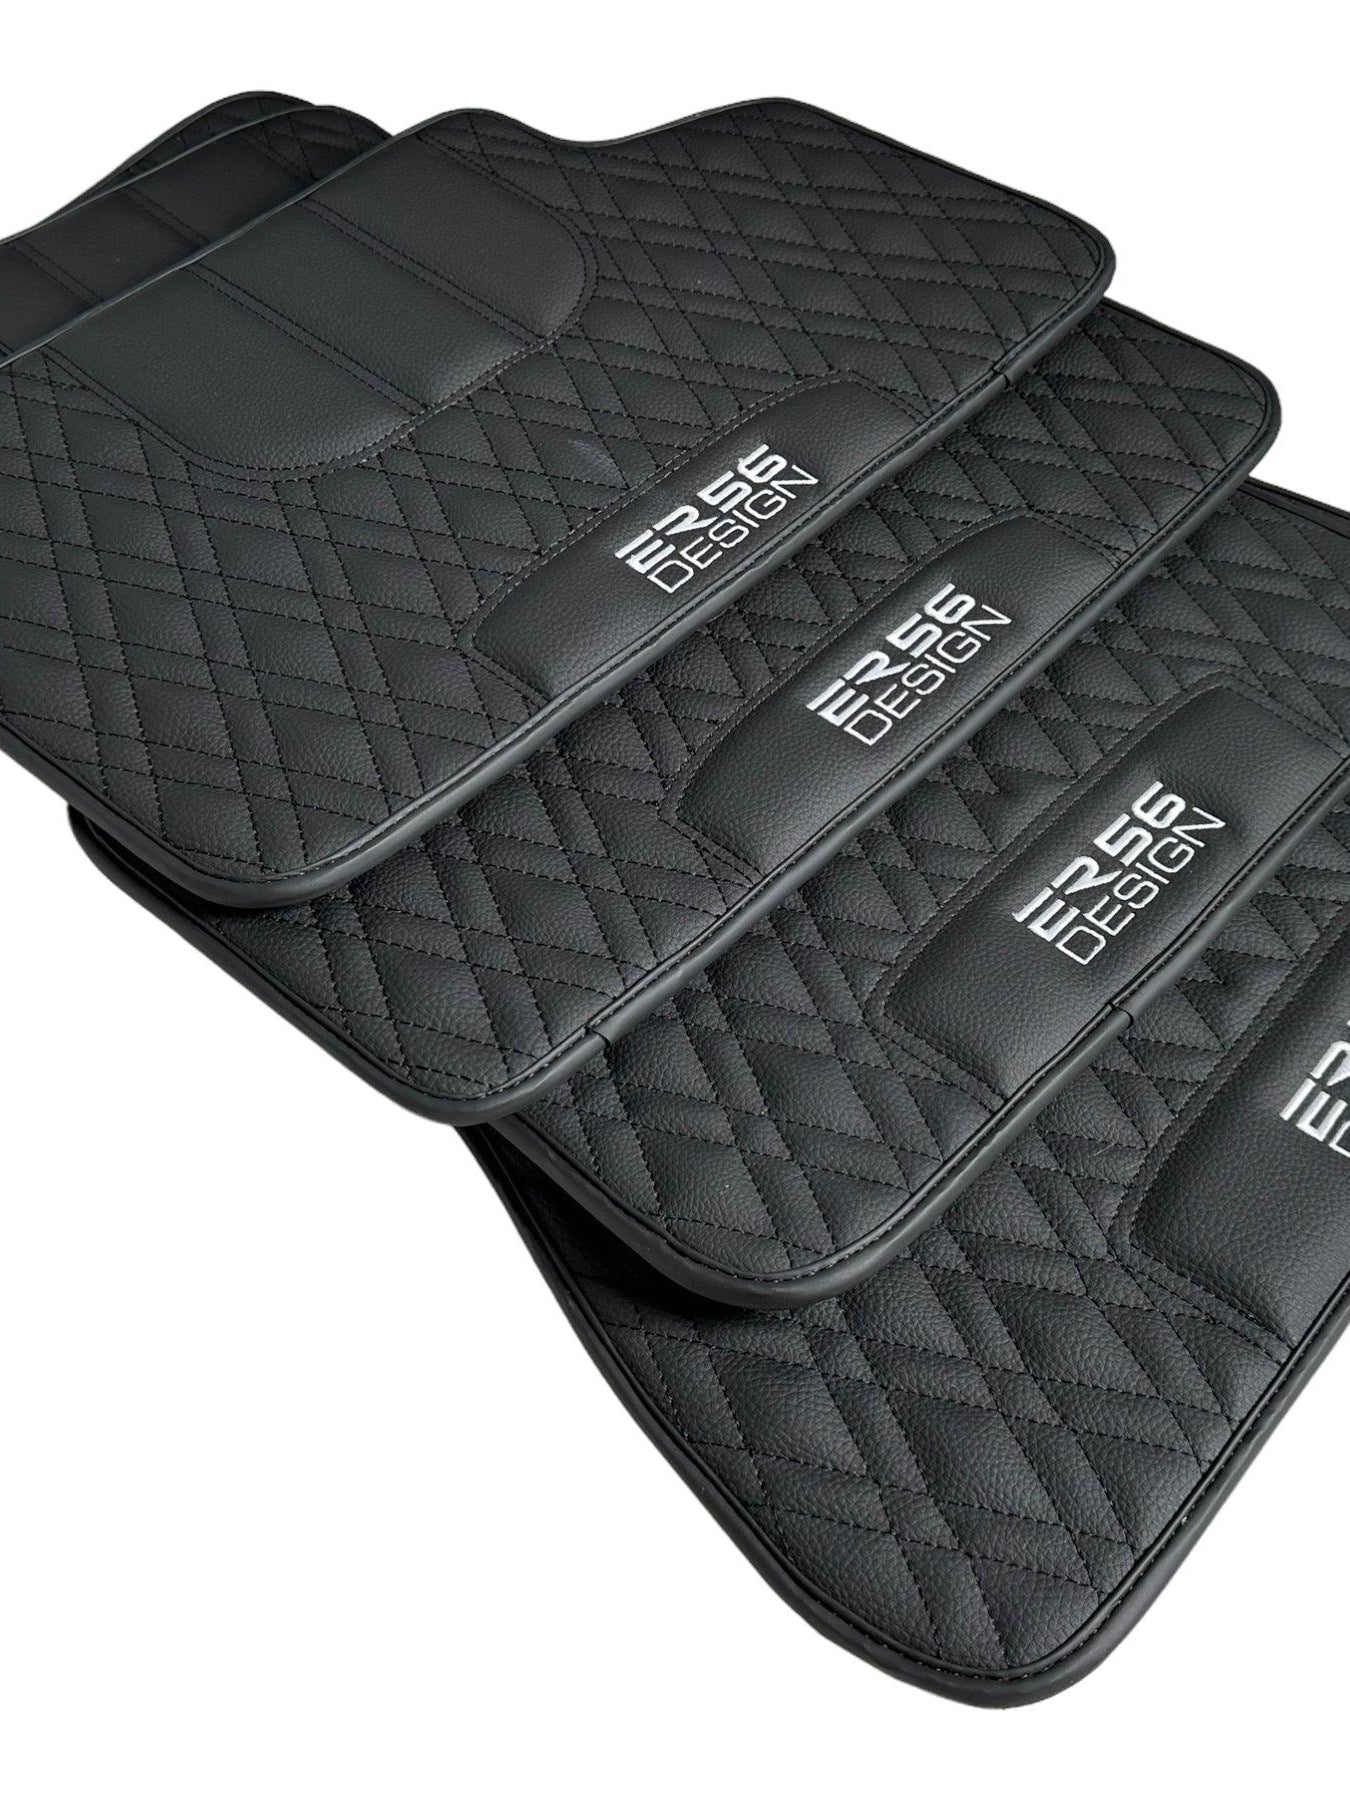 Floor Mats For BMW 1 Series F20 Black Leather Er56 Design - AutoWin